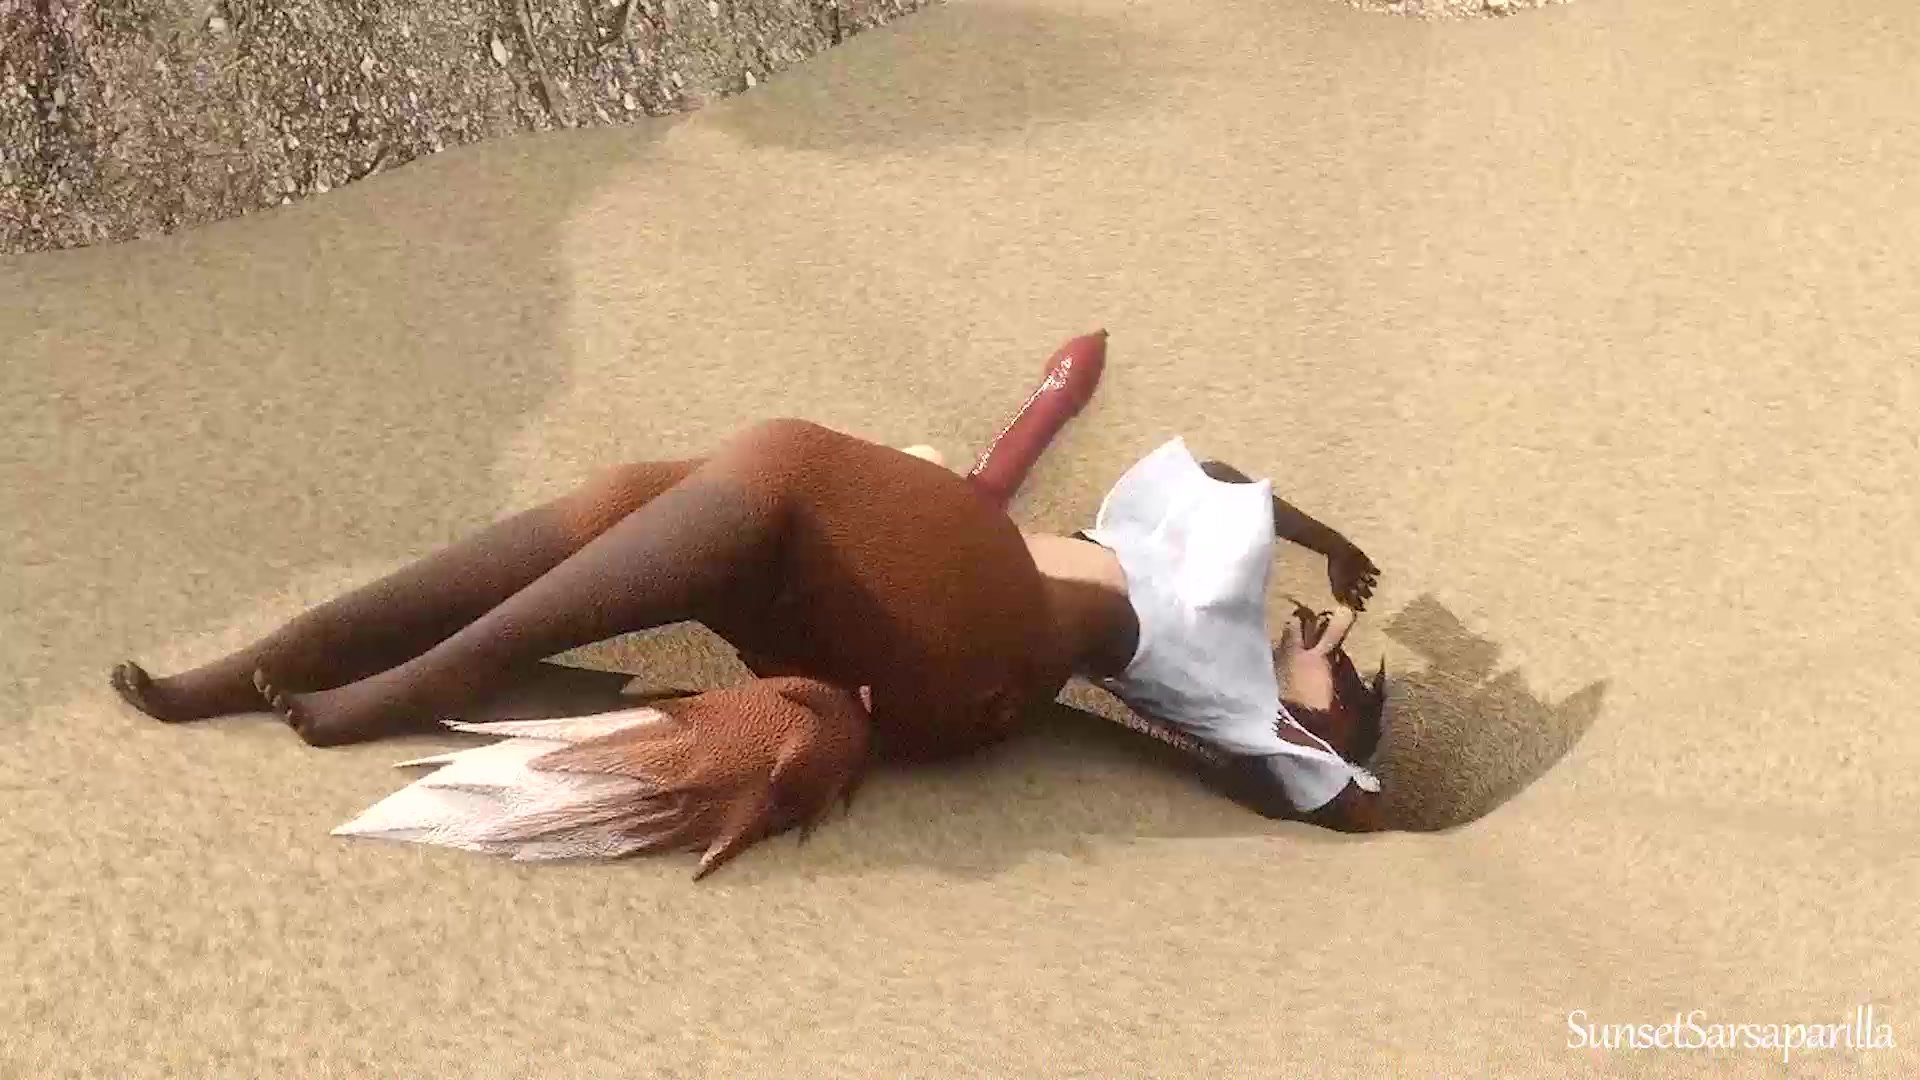 Furry Shemale Beach - Shemale furry masturbates while sinking in quicksand - ThisVid.com